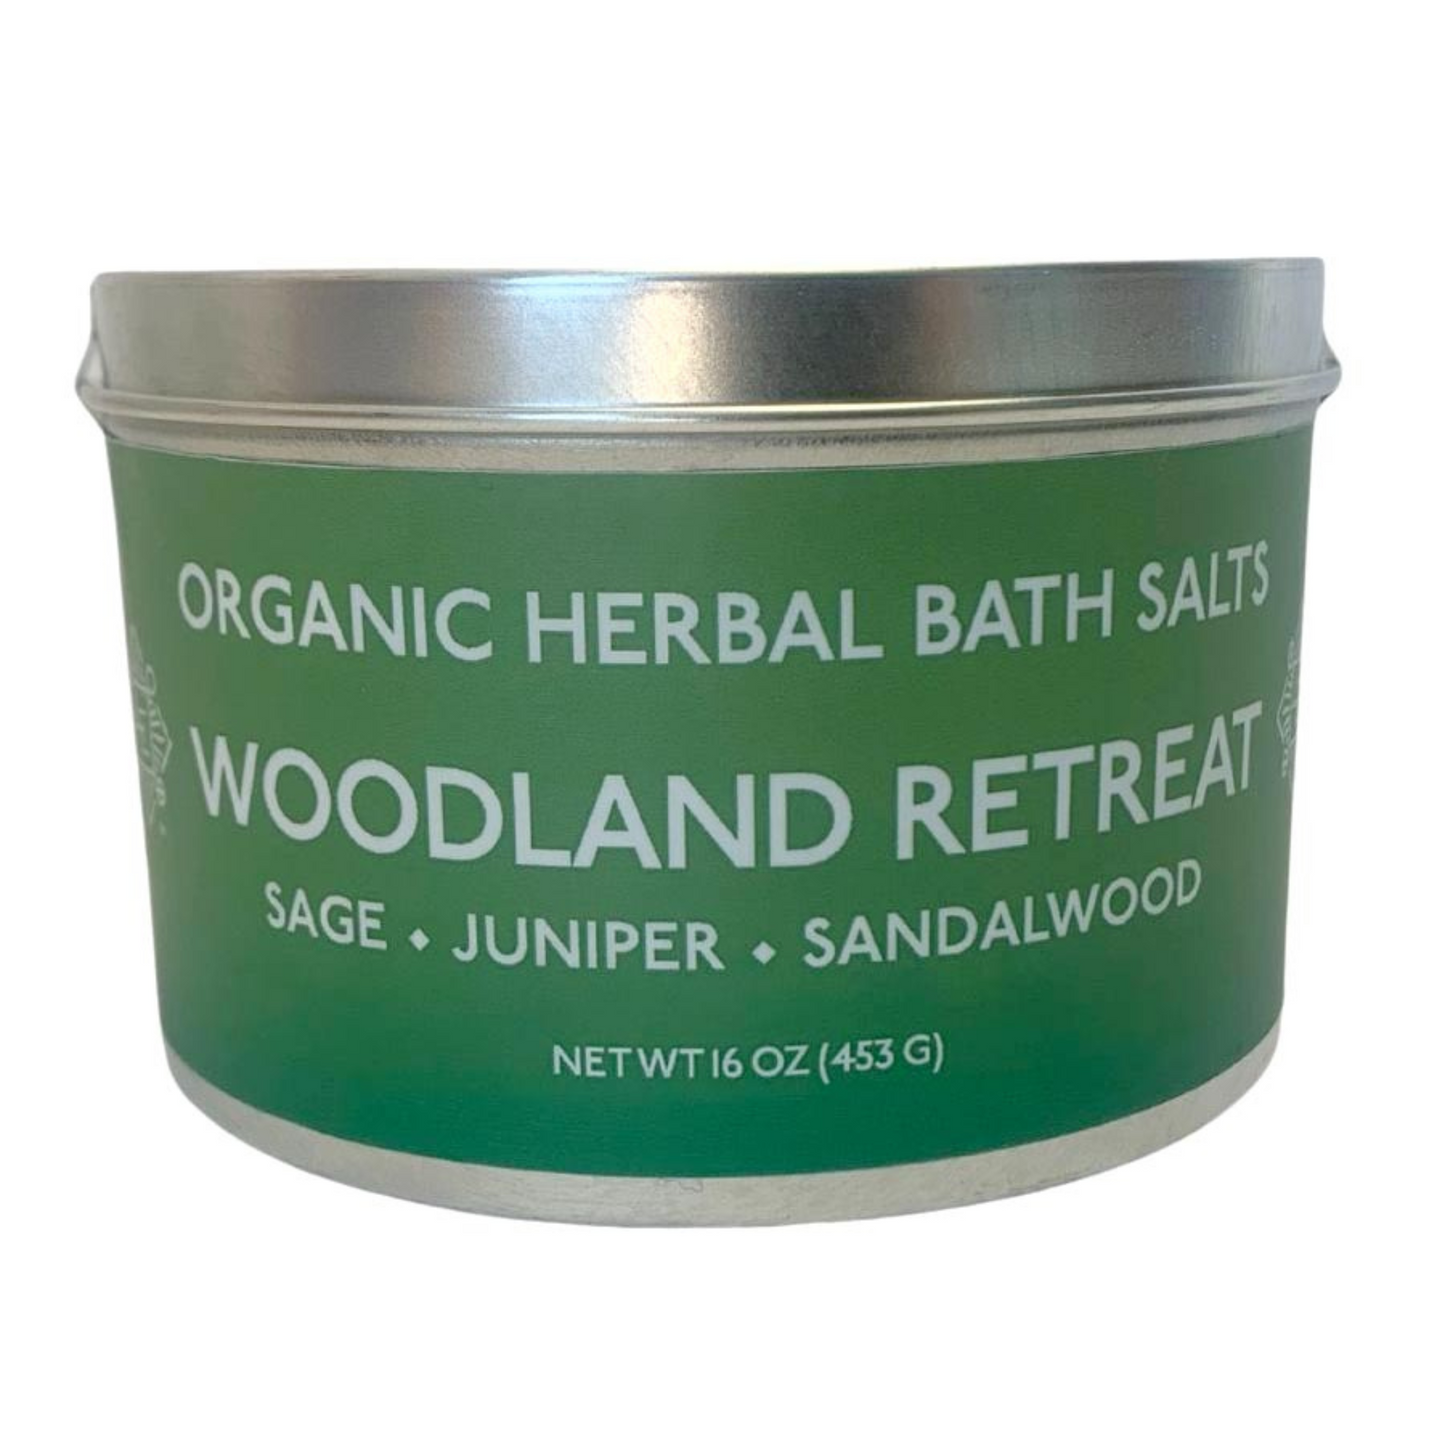 Primary Image of Four Elements Woodland Retreat Bath Salt (16 oz)